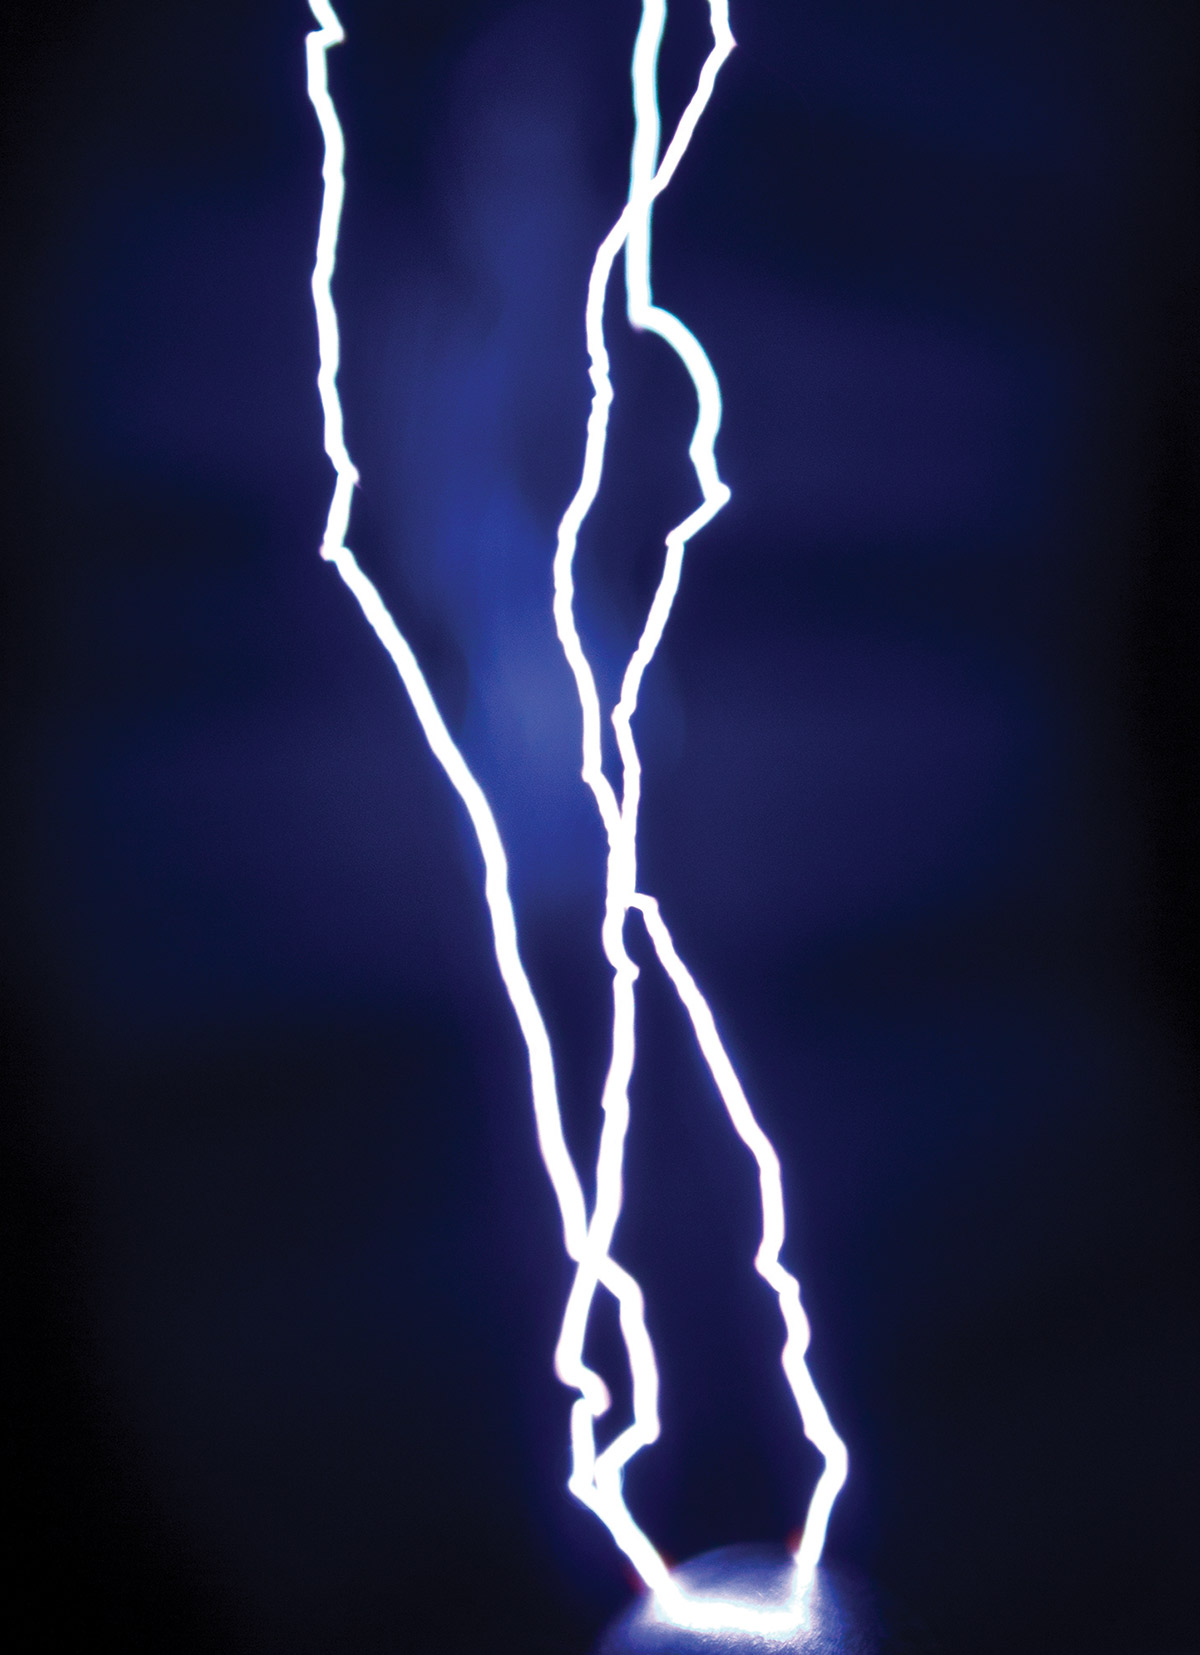 Electricity against a dark blue background, looks like lightning against a dark sky 